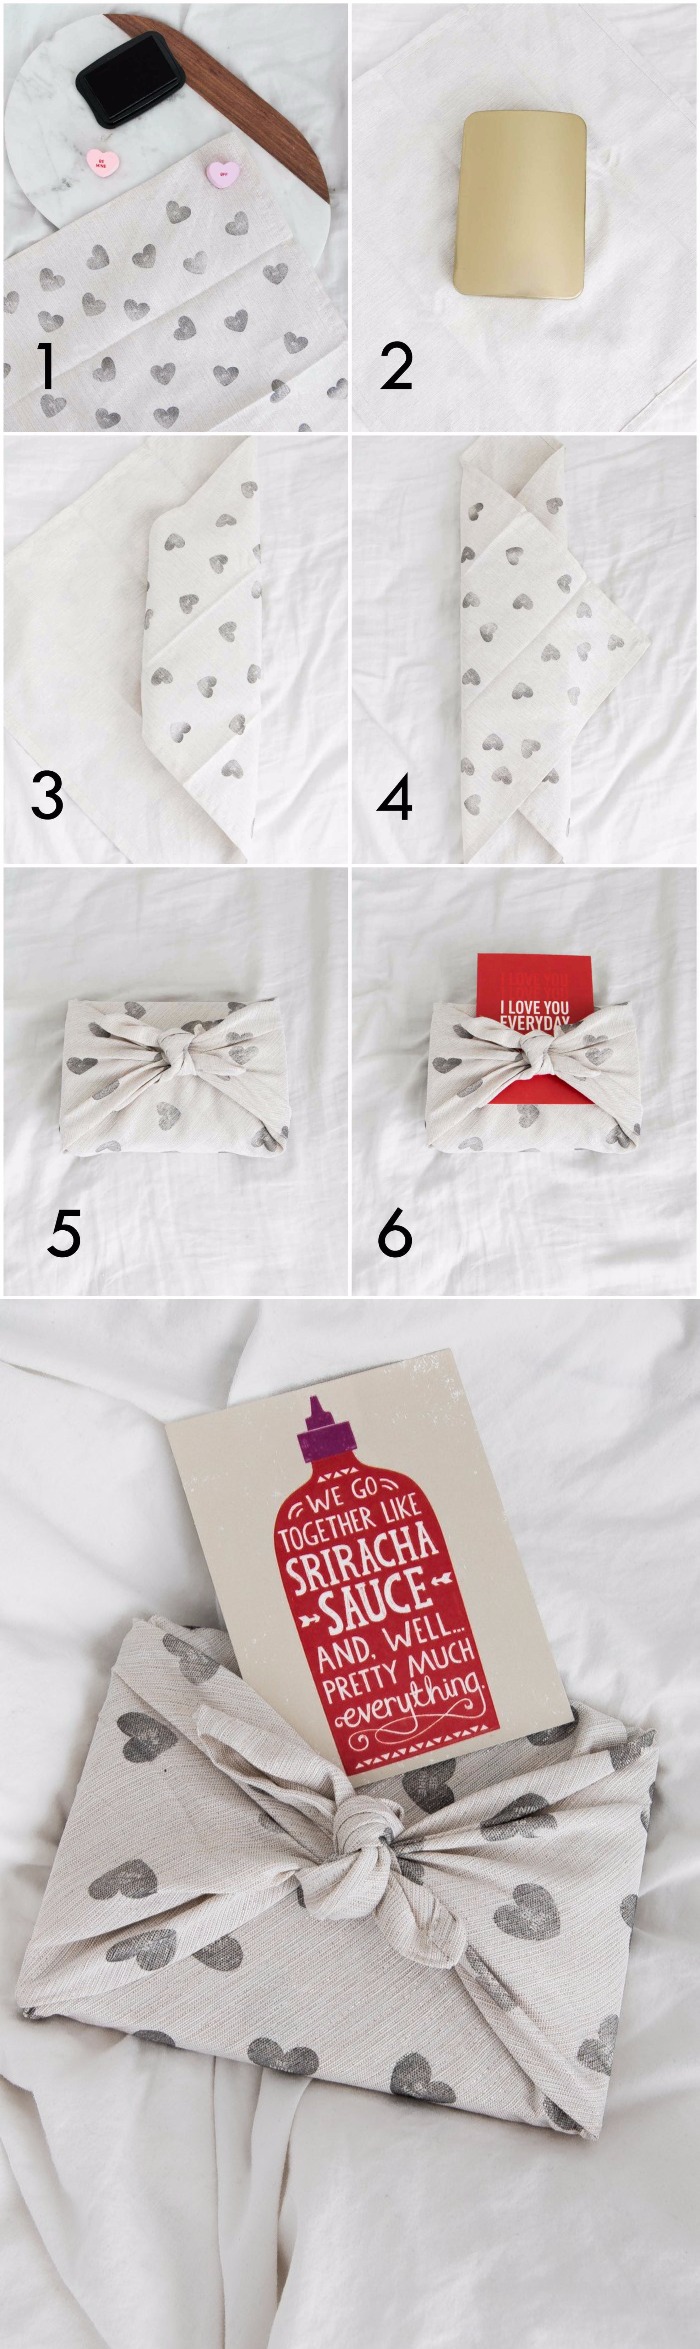 DIY Stamped Fabric Gift Wrap